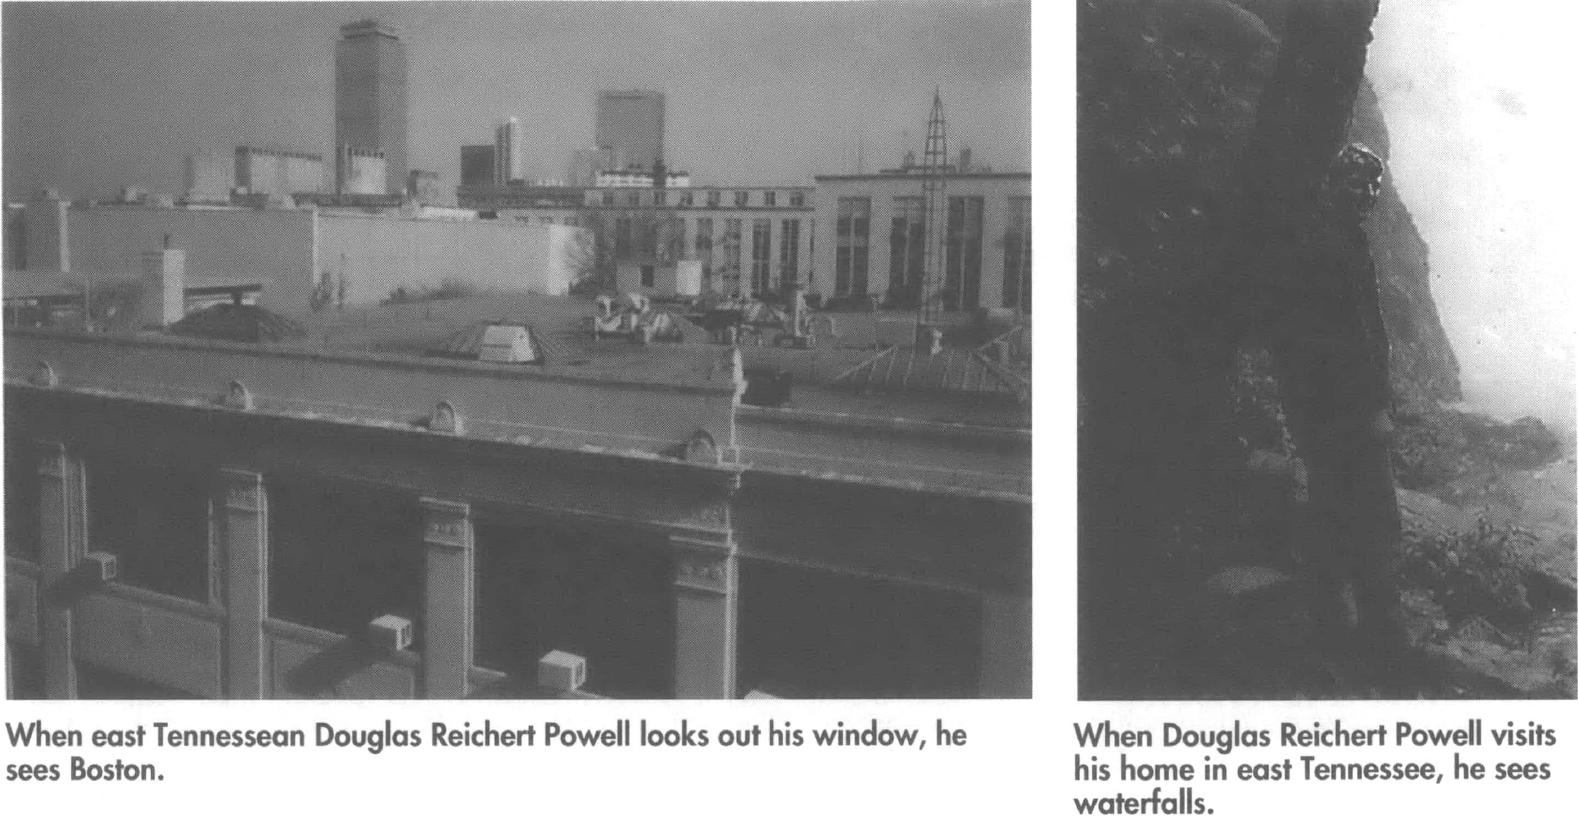 When east Tennessean Douglas Reichert Powell looks out his windows, he sees Boston. When Douglas Reichert Powell visits his home in east Tennessee, he sees waterfalls.